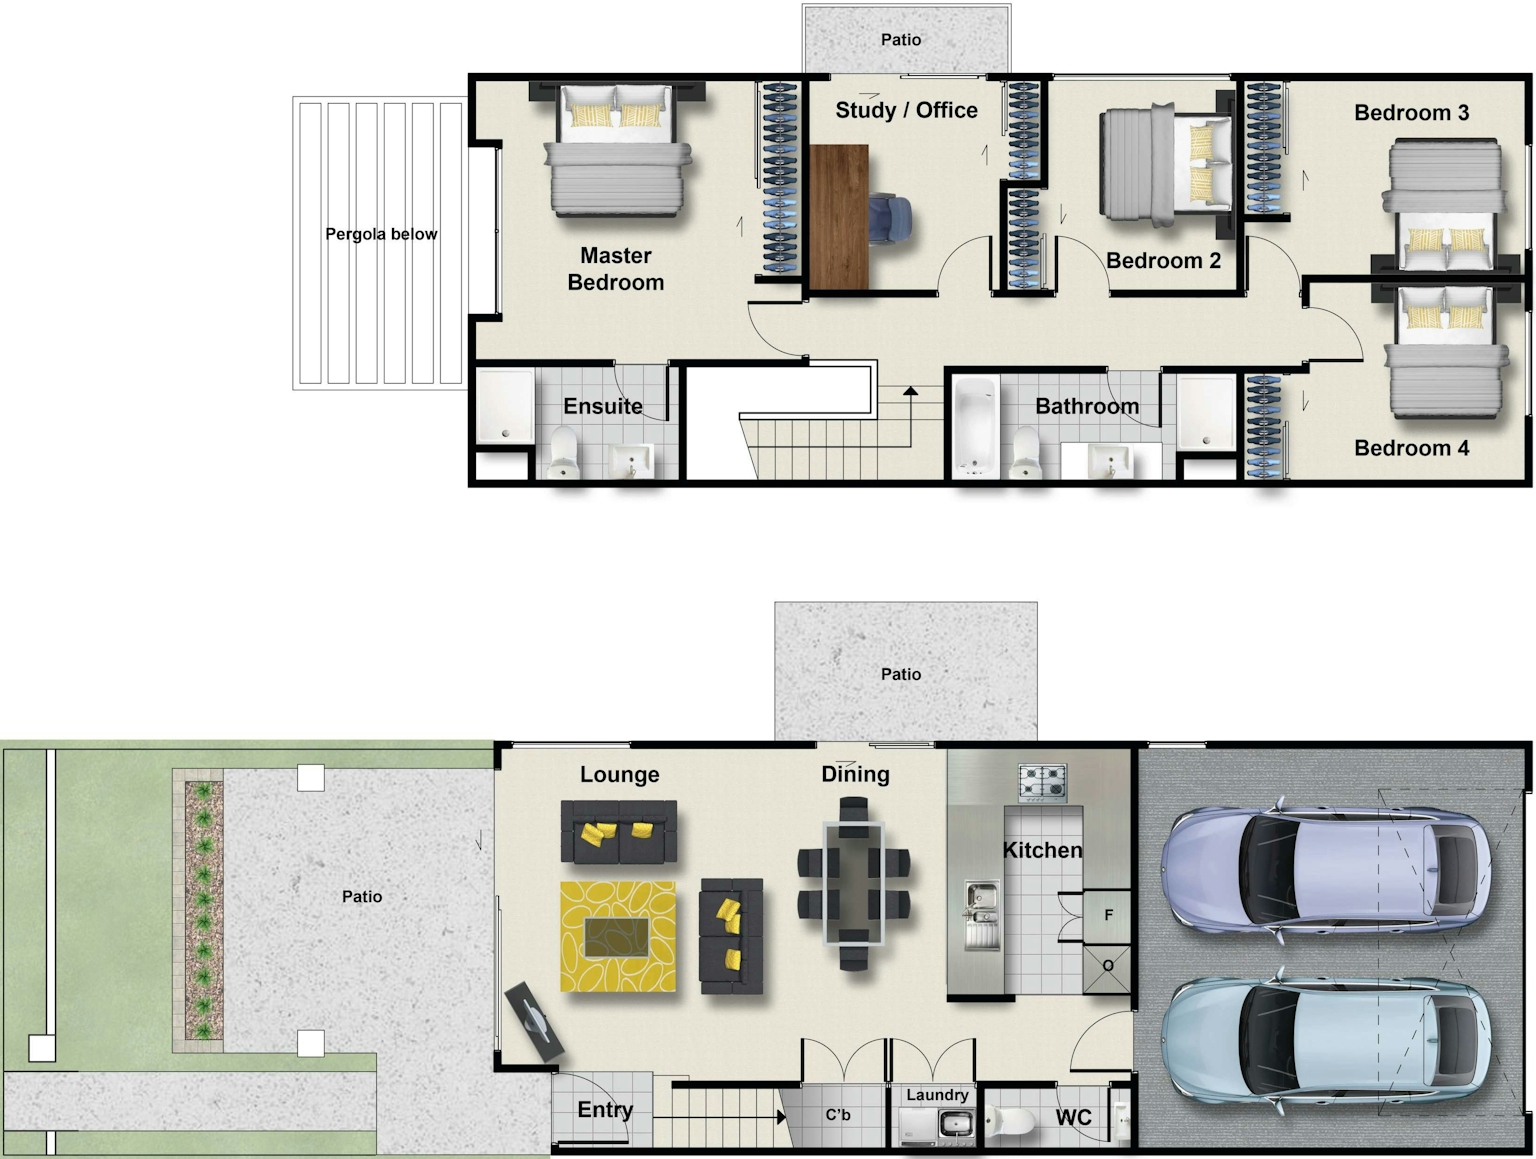 Lot 272 Addison Estate, Takanini floor plan